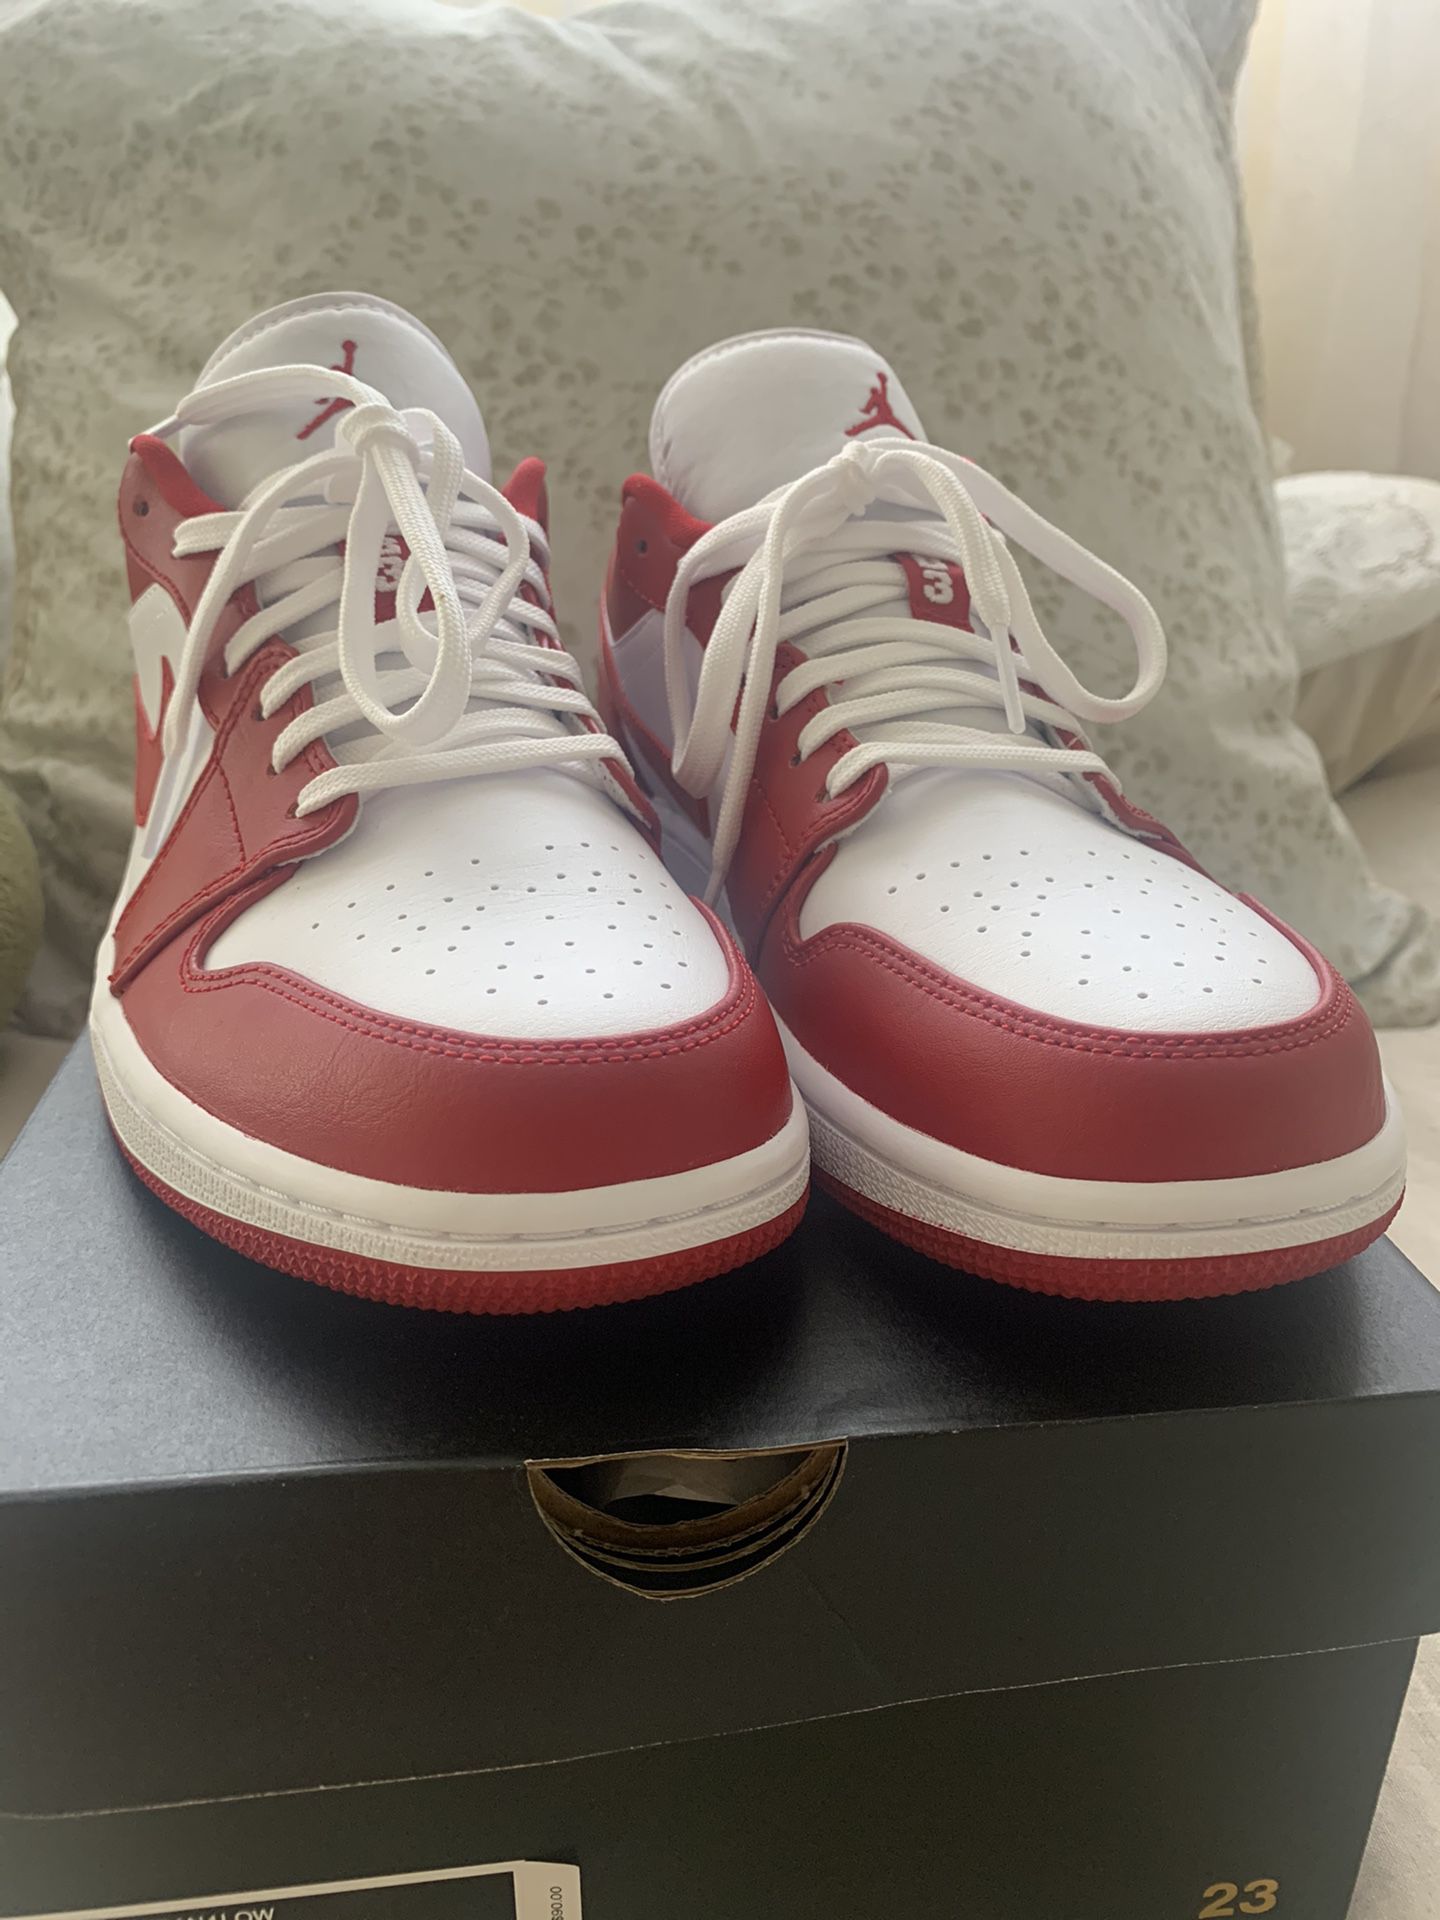 Air Jordan retro 1 “gym red”